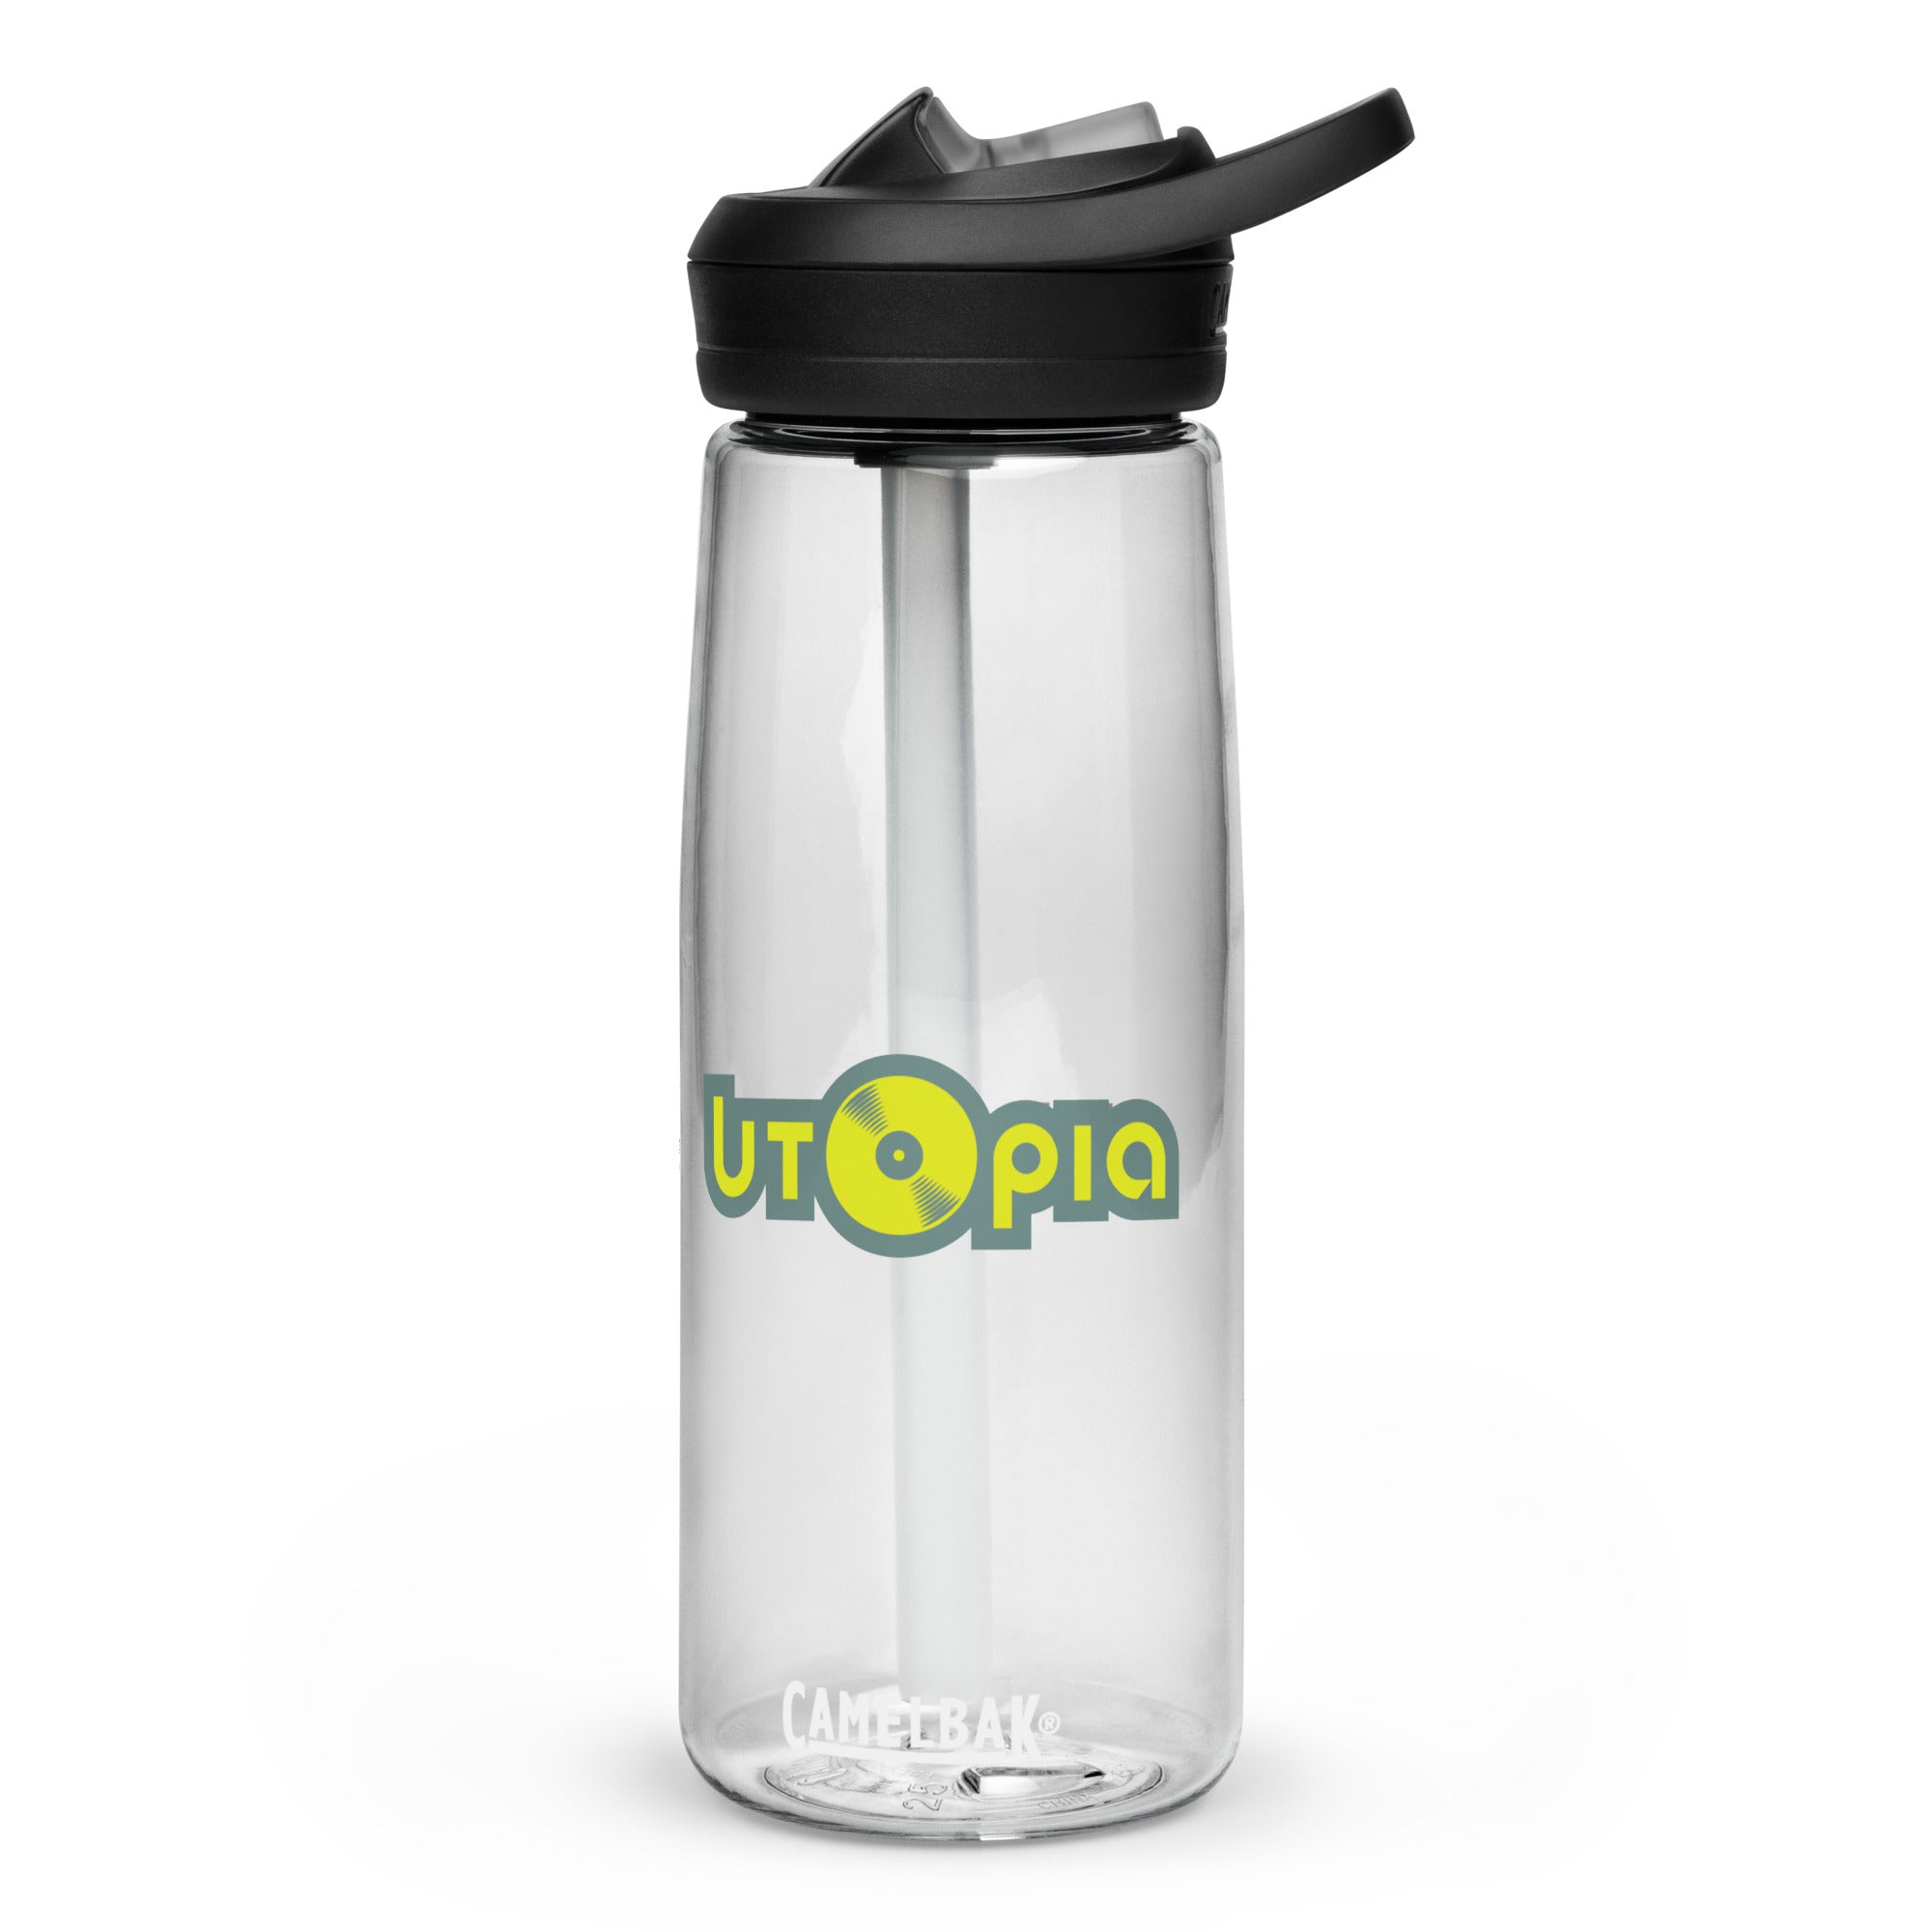 Utopia: CamelBak Eddy®+ Sports Bottle